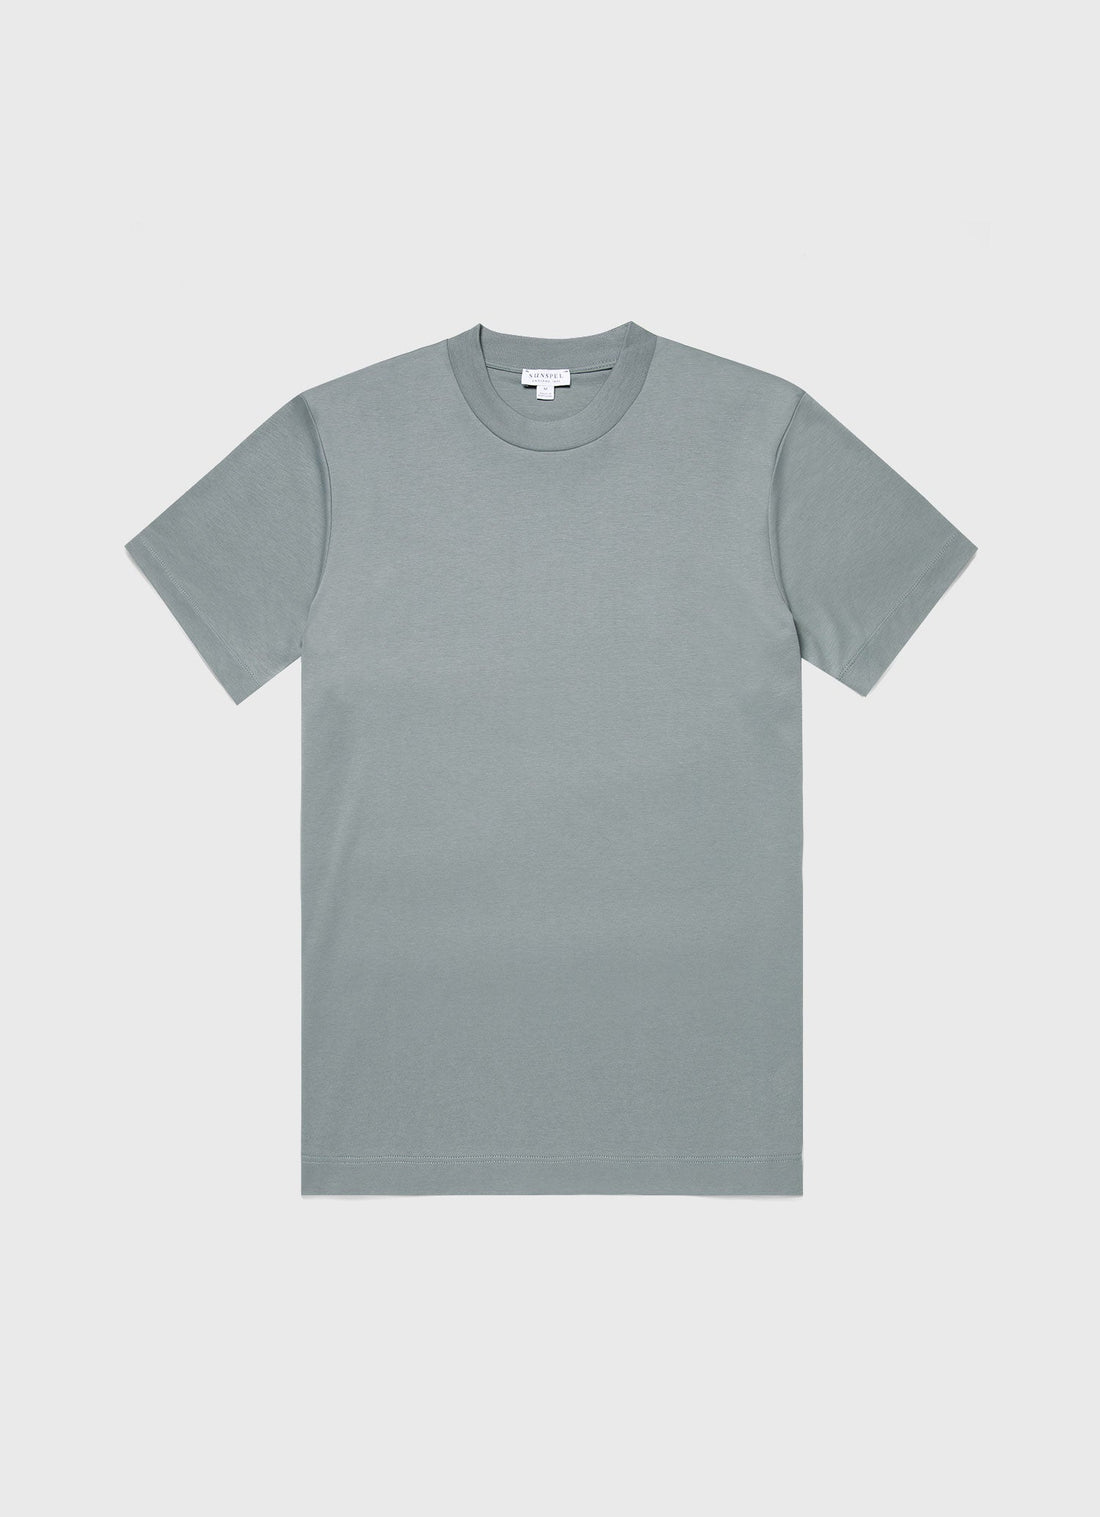 Men's Relaxed Fit Heavyweight T-shirt in Smoke Green